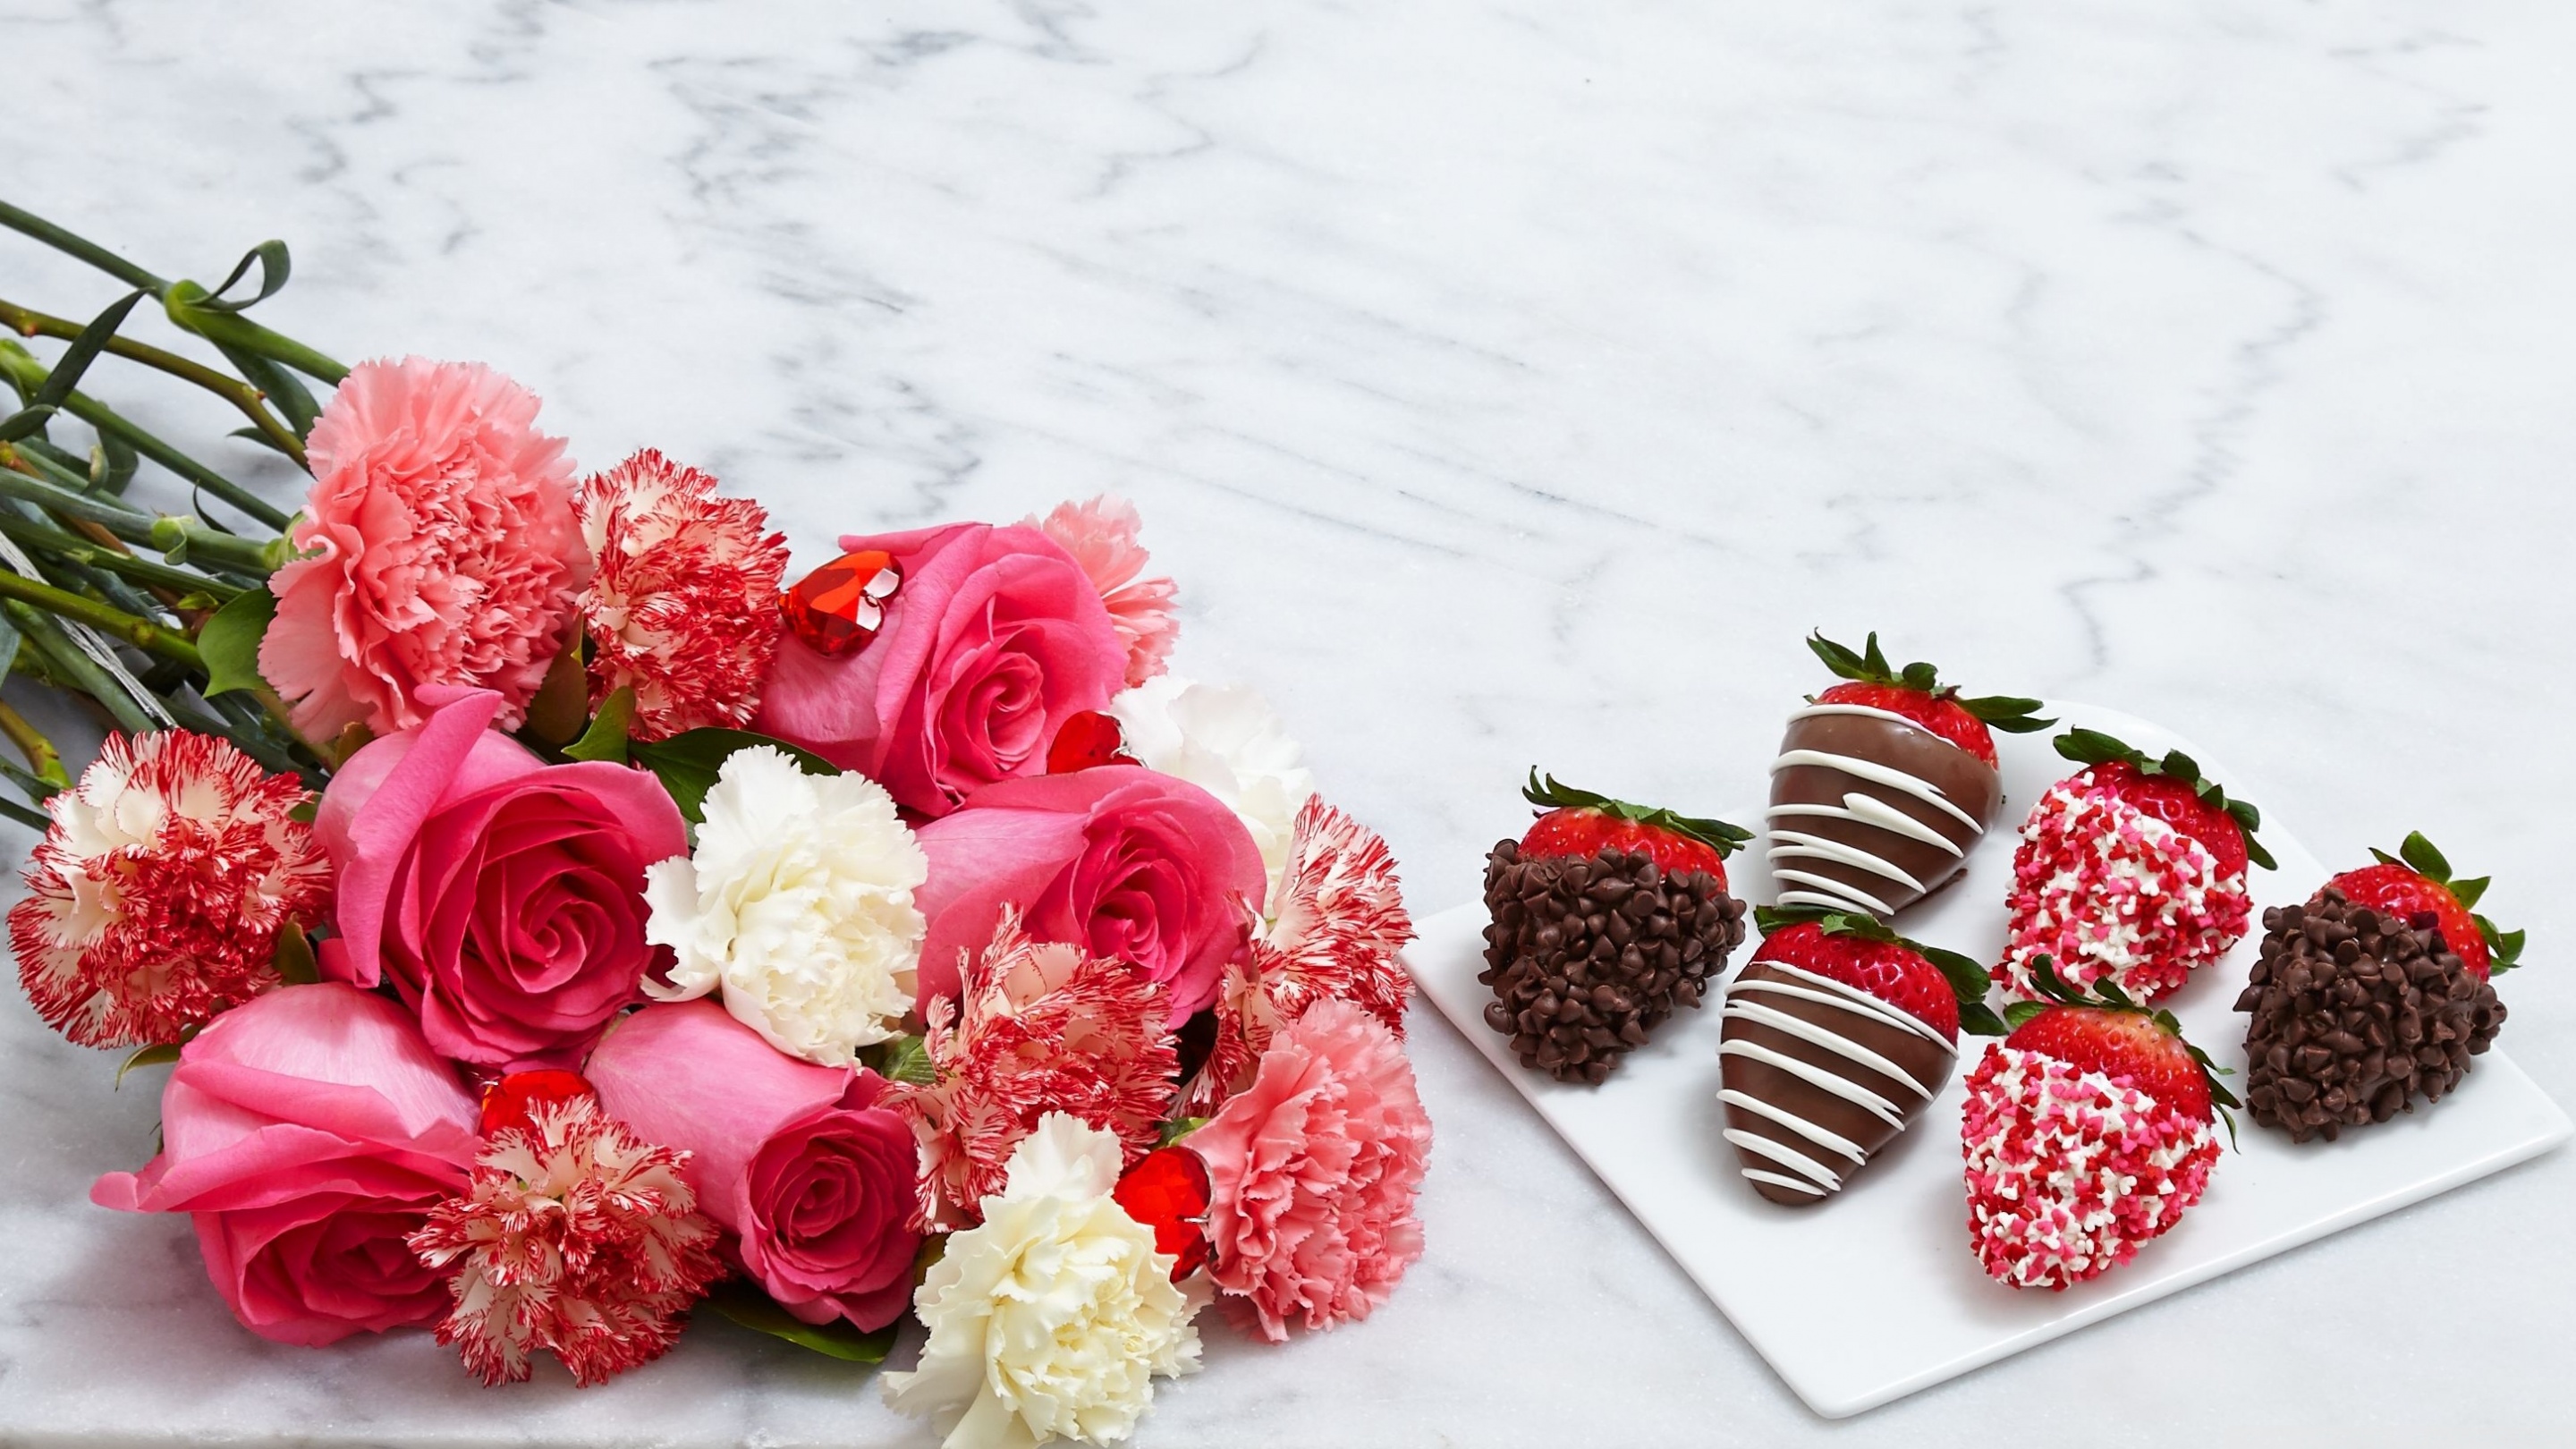 Chocolate Dipped Strawberries and Flowers HD desktop wallpaper